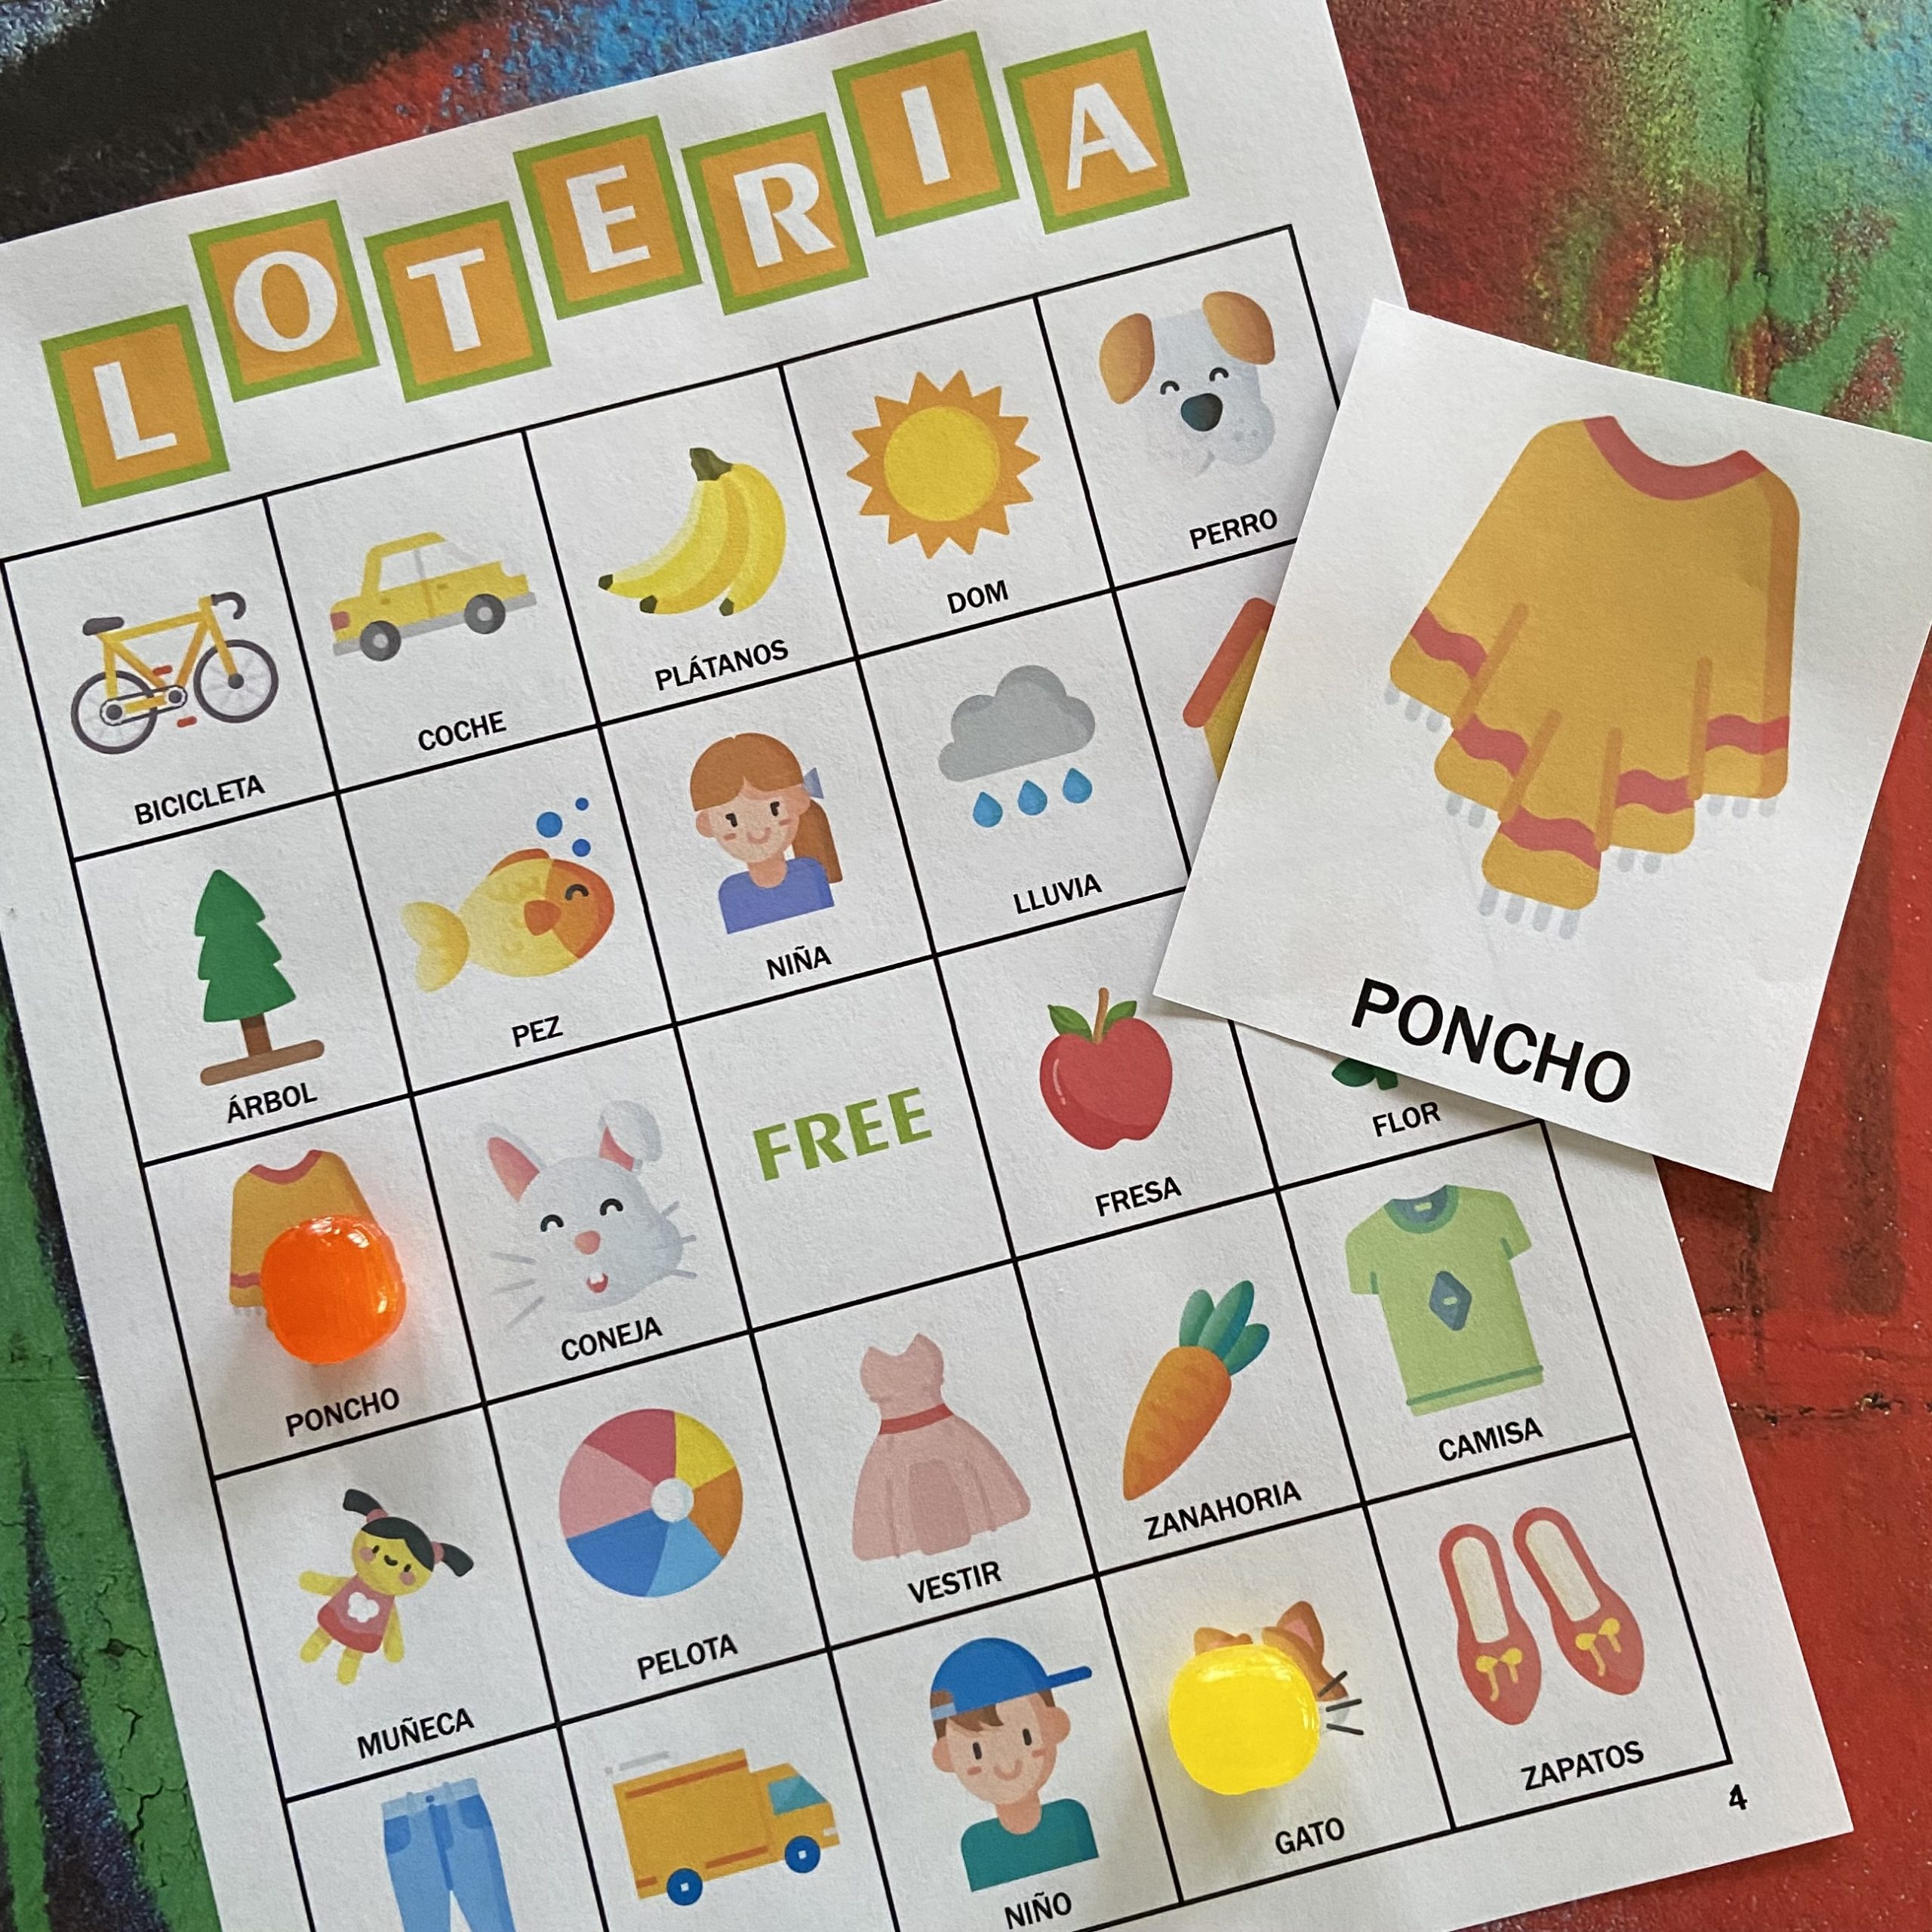 Spanish style Bingo game